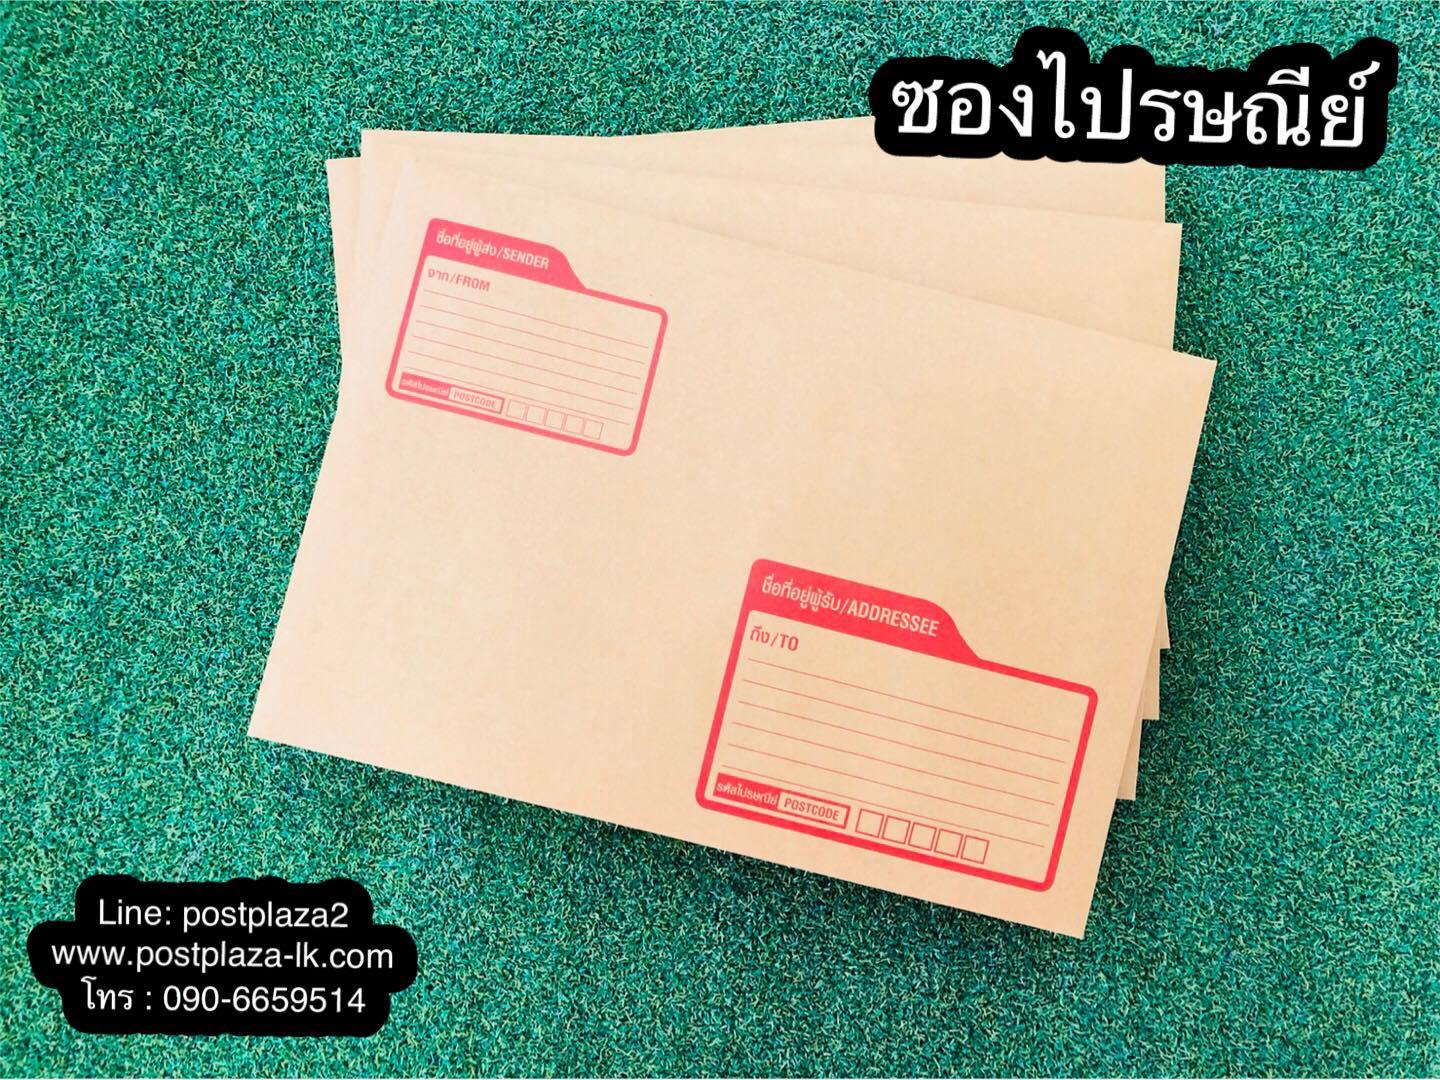 Postplaza ซองจดหมาย ซองไปรษณีย์สีน้ำตาลขนาด 5x8 นิ้ว (50 ใบ)